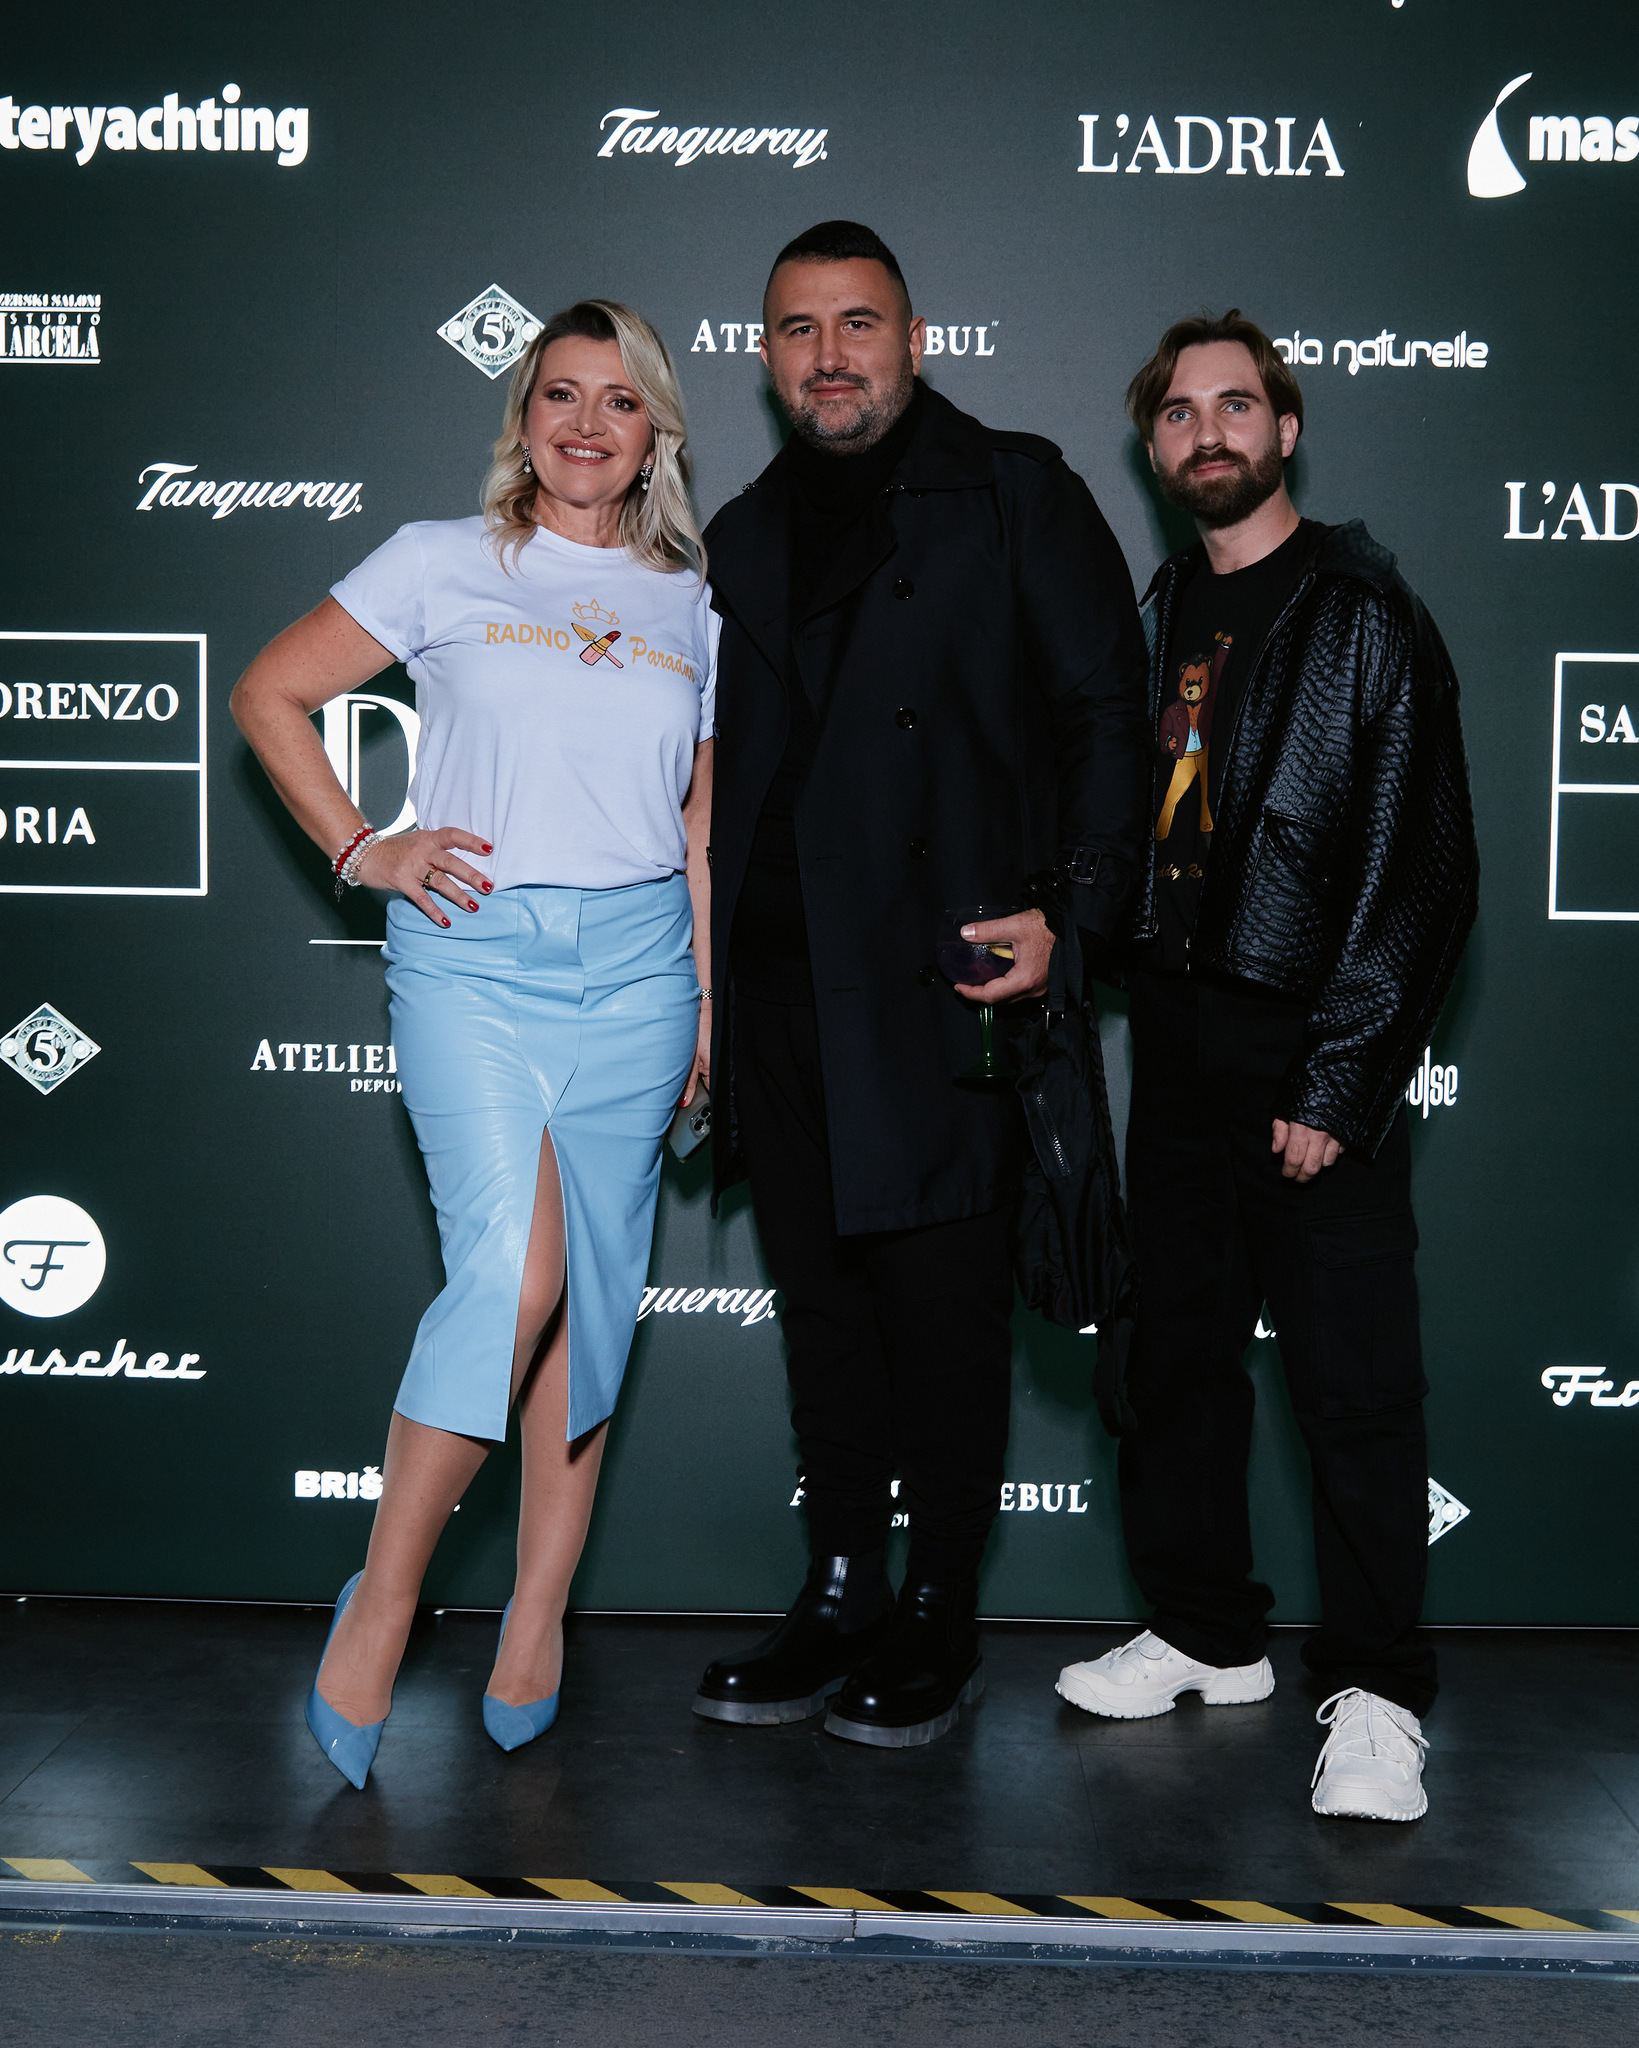 Spektakularna revija modne marke Duchess rock*s fashion u Porsche centru Zagreb